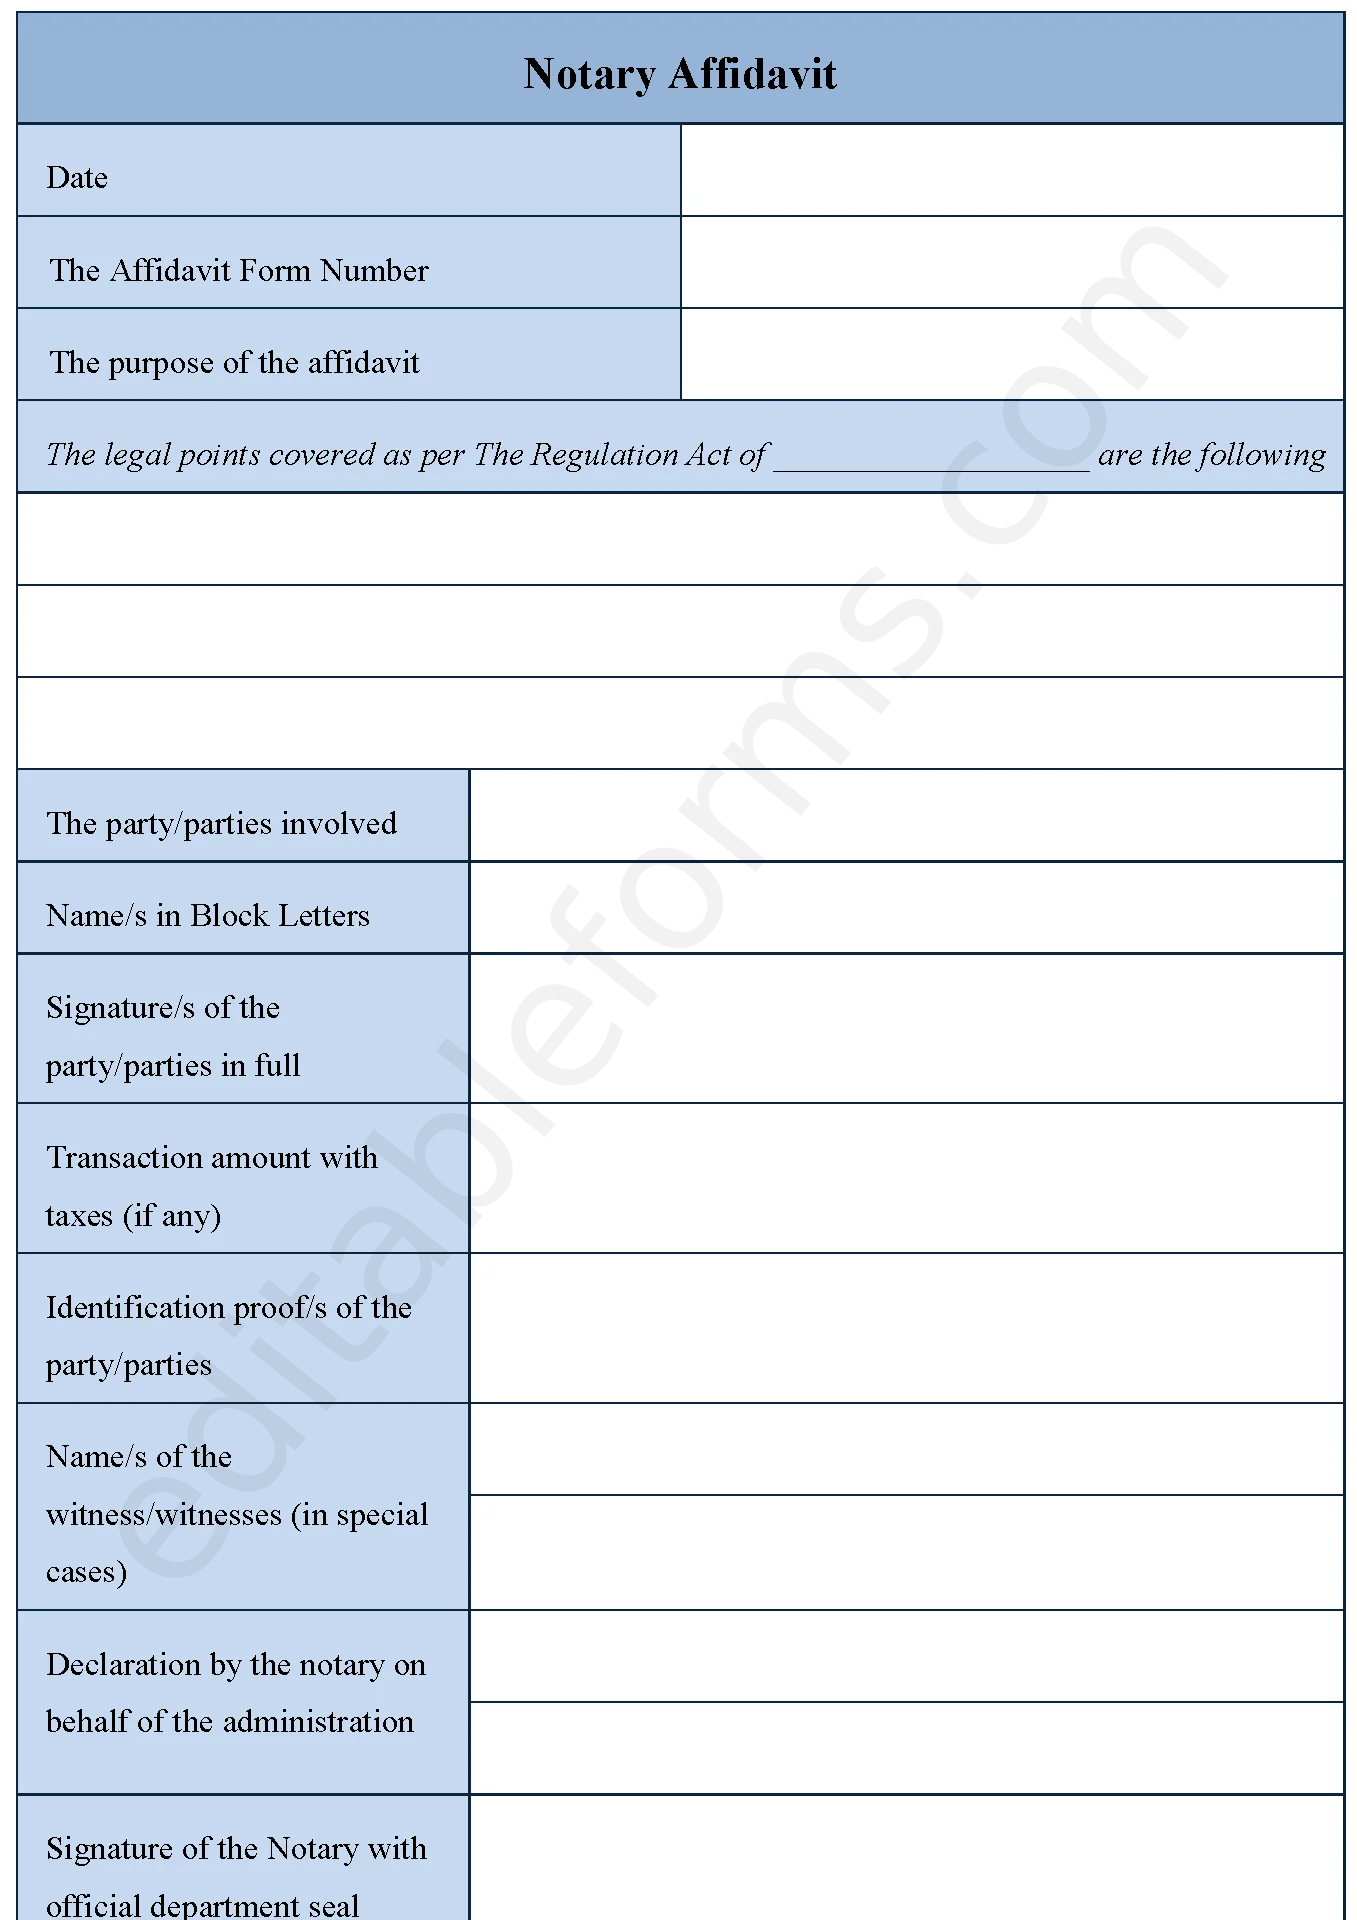 Notary Affidavit Fillable PDF Template